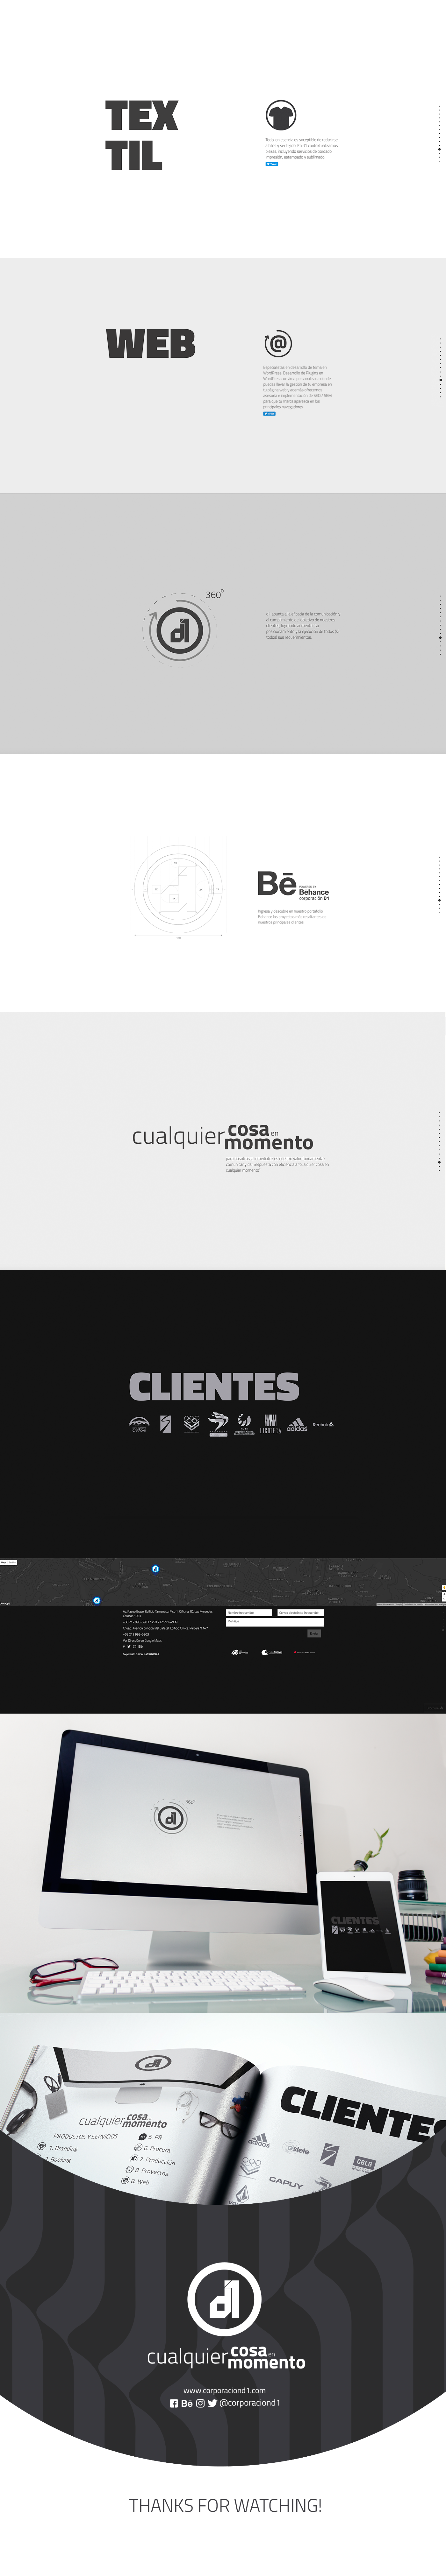 branding  Website corporaciond1 logo design venezuela caracas Web Responsive corporate